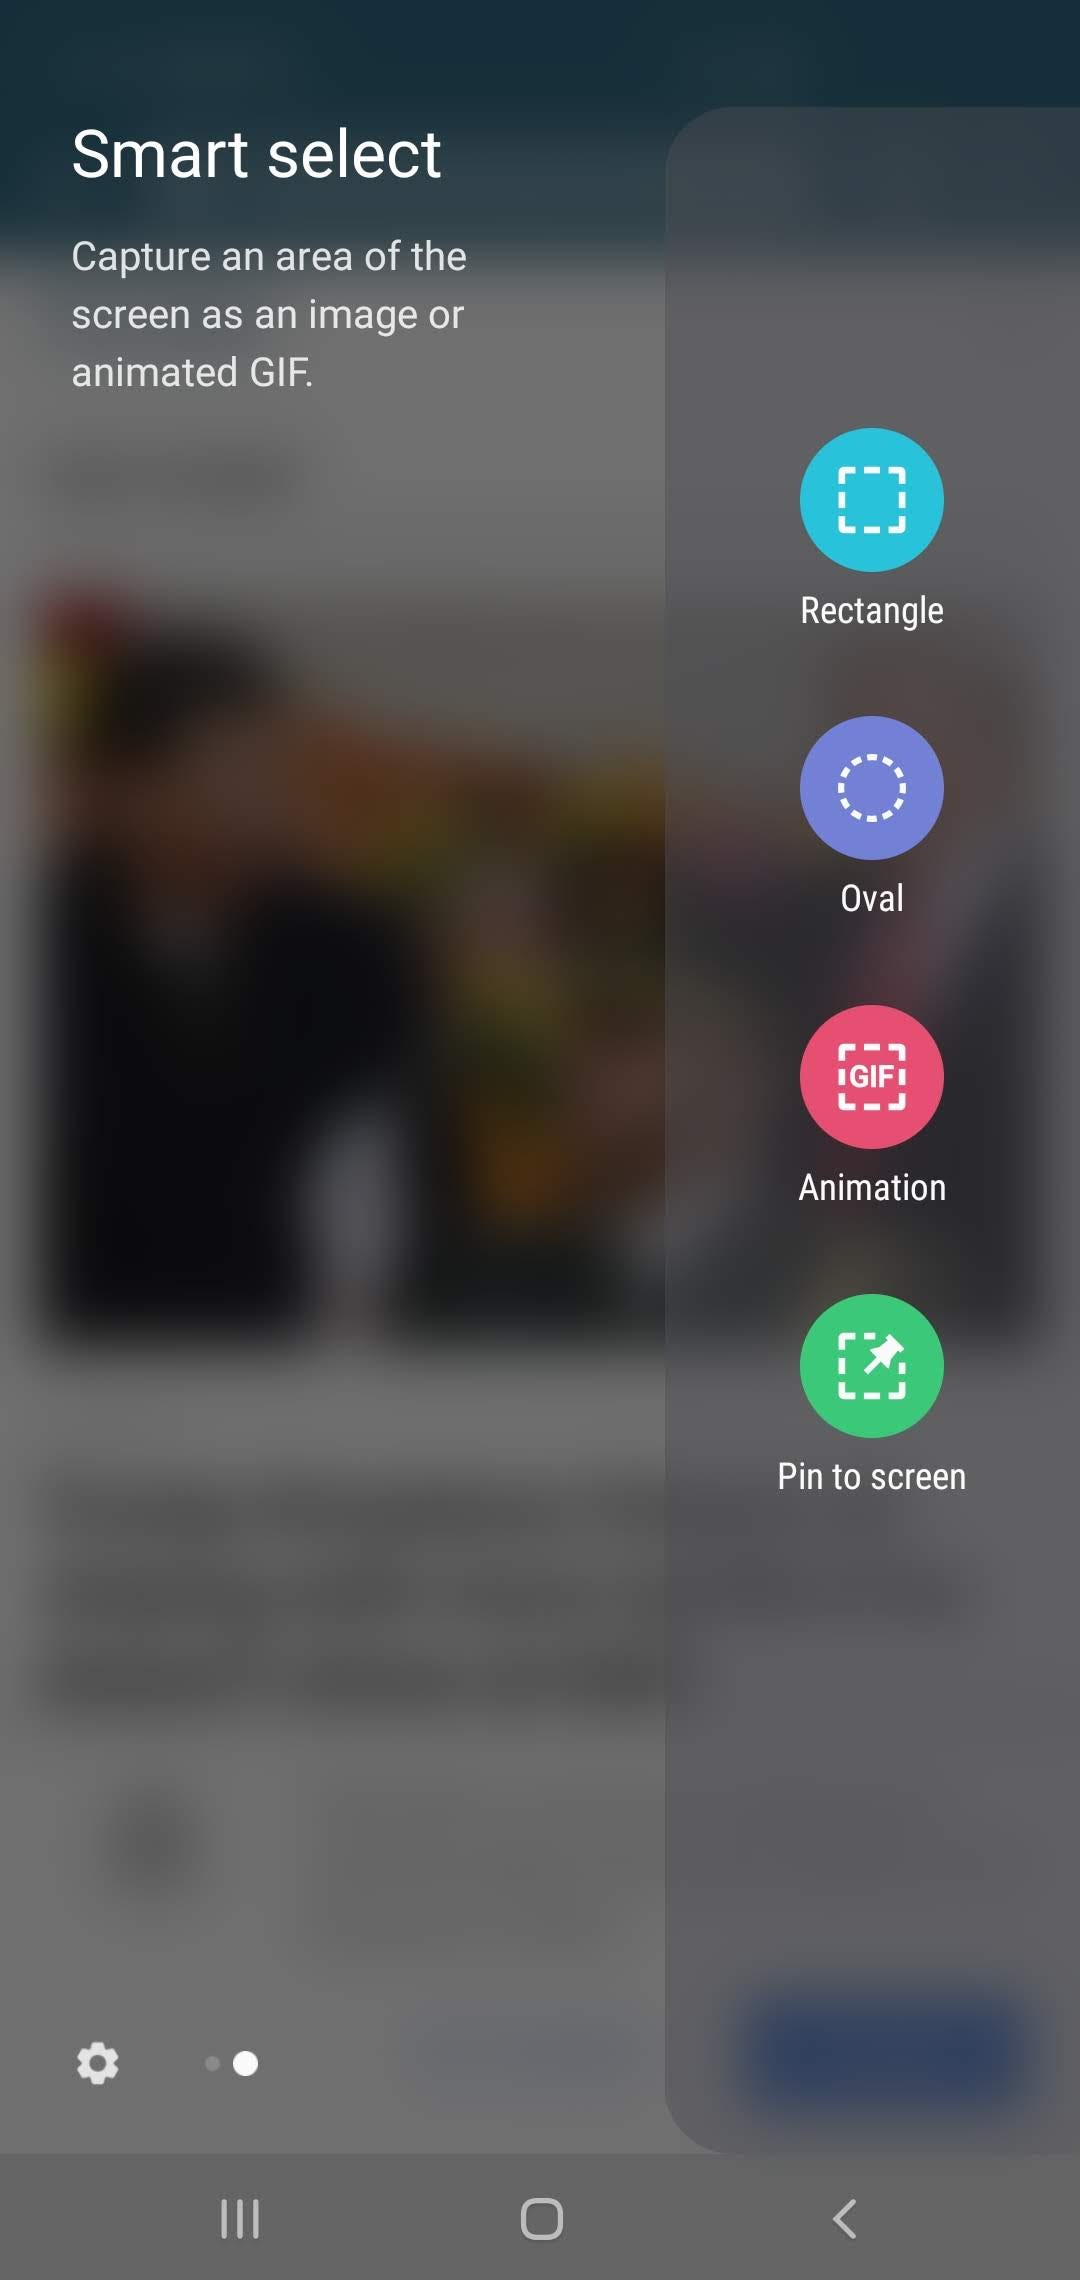 The "Smart select" menu on a Samsung Galaxy.